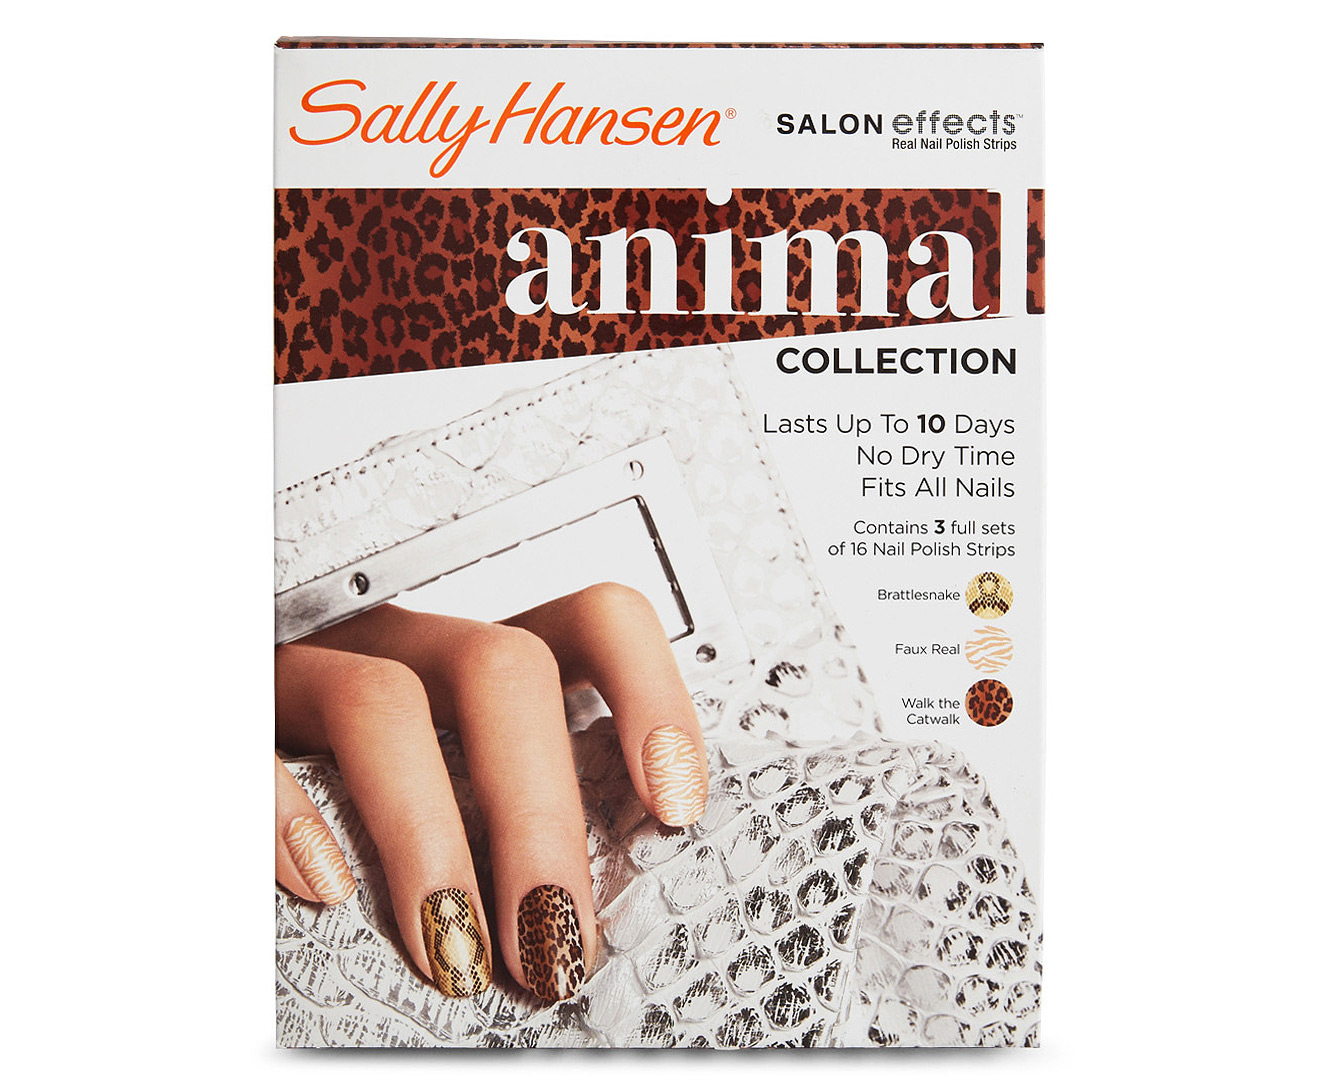 1. Sally Hansen Salon Effects Real Nail Polish Strips - wide 2